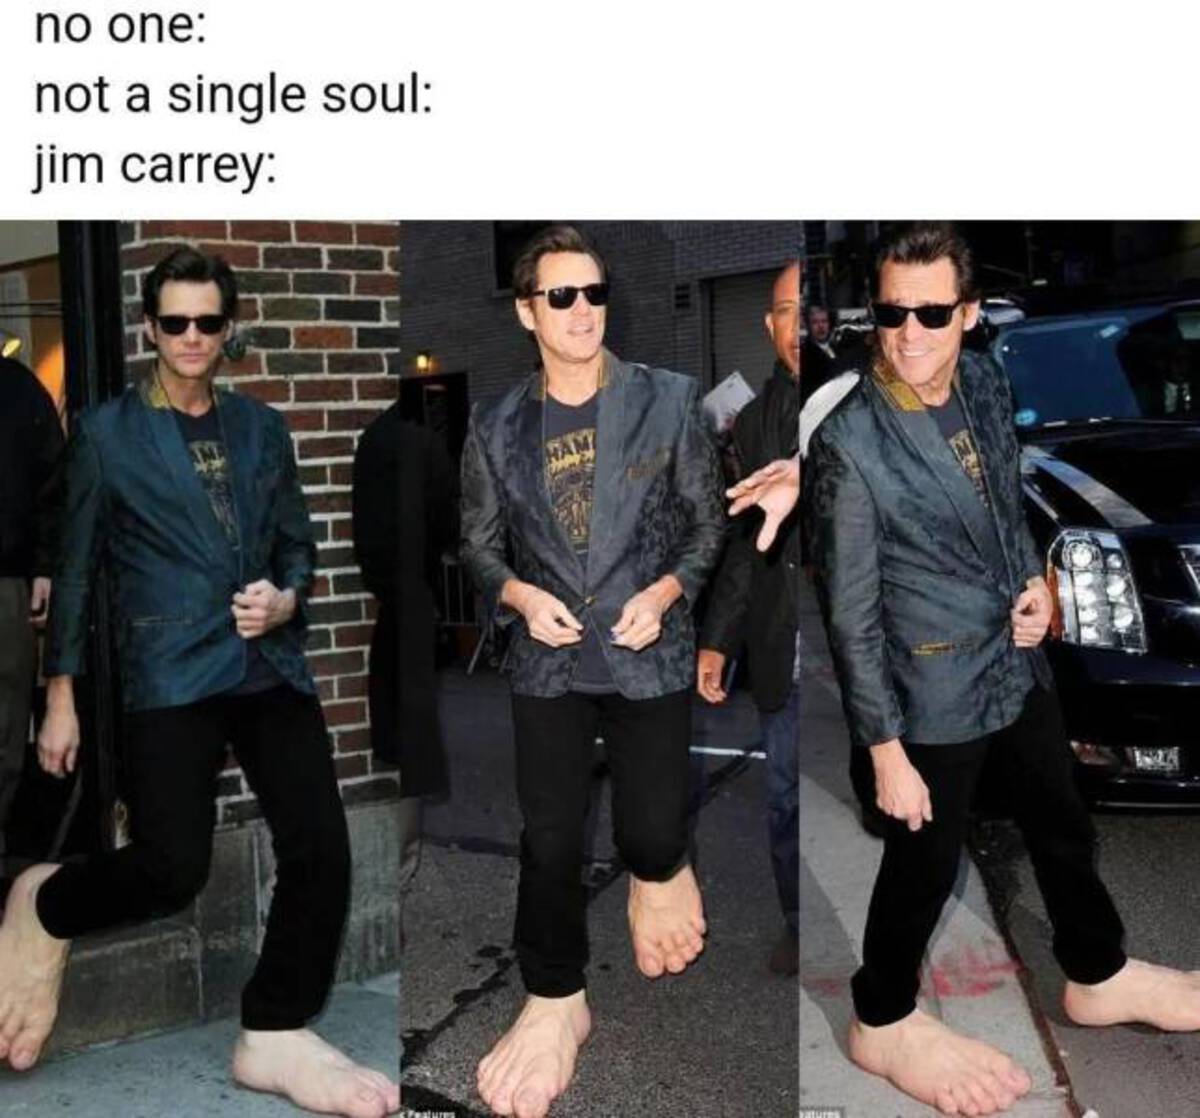 jim carey wearing feet - no one not a single soul jim carrey Hhh Features